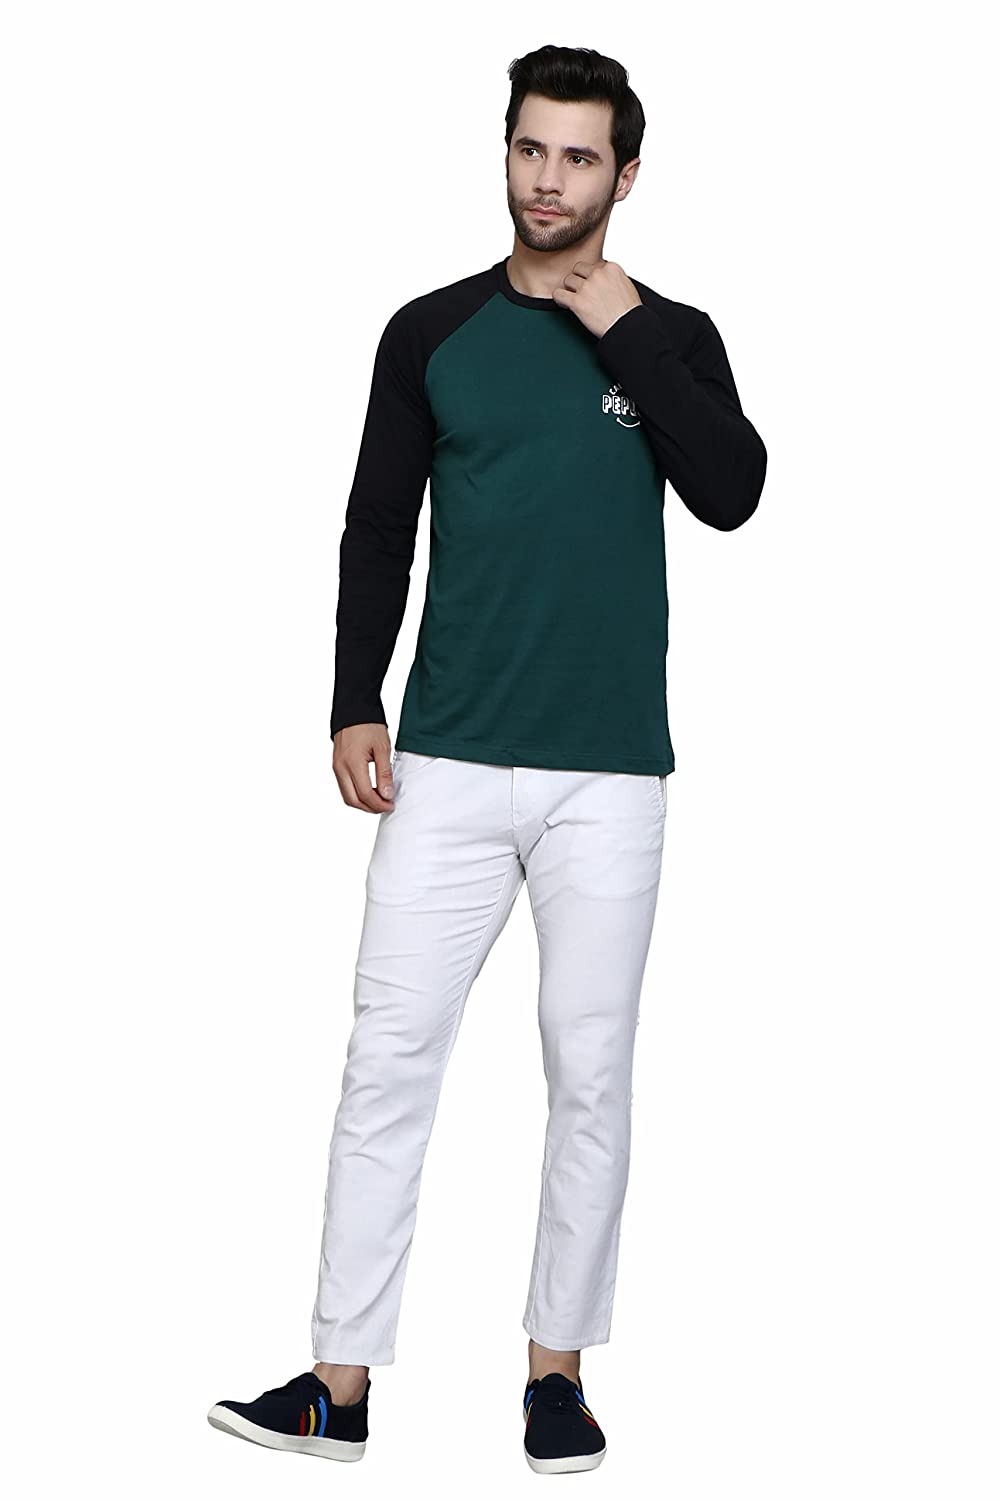 Regular Fit Green Black Color Raglan Full Sleeve Premium Class Cotton T-Shirt for Men